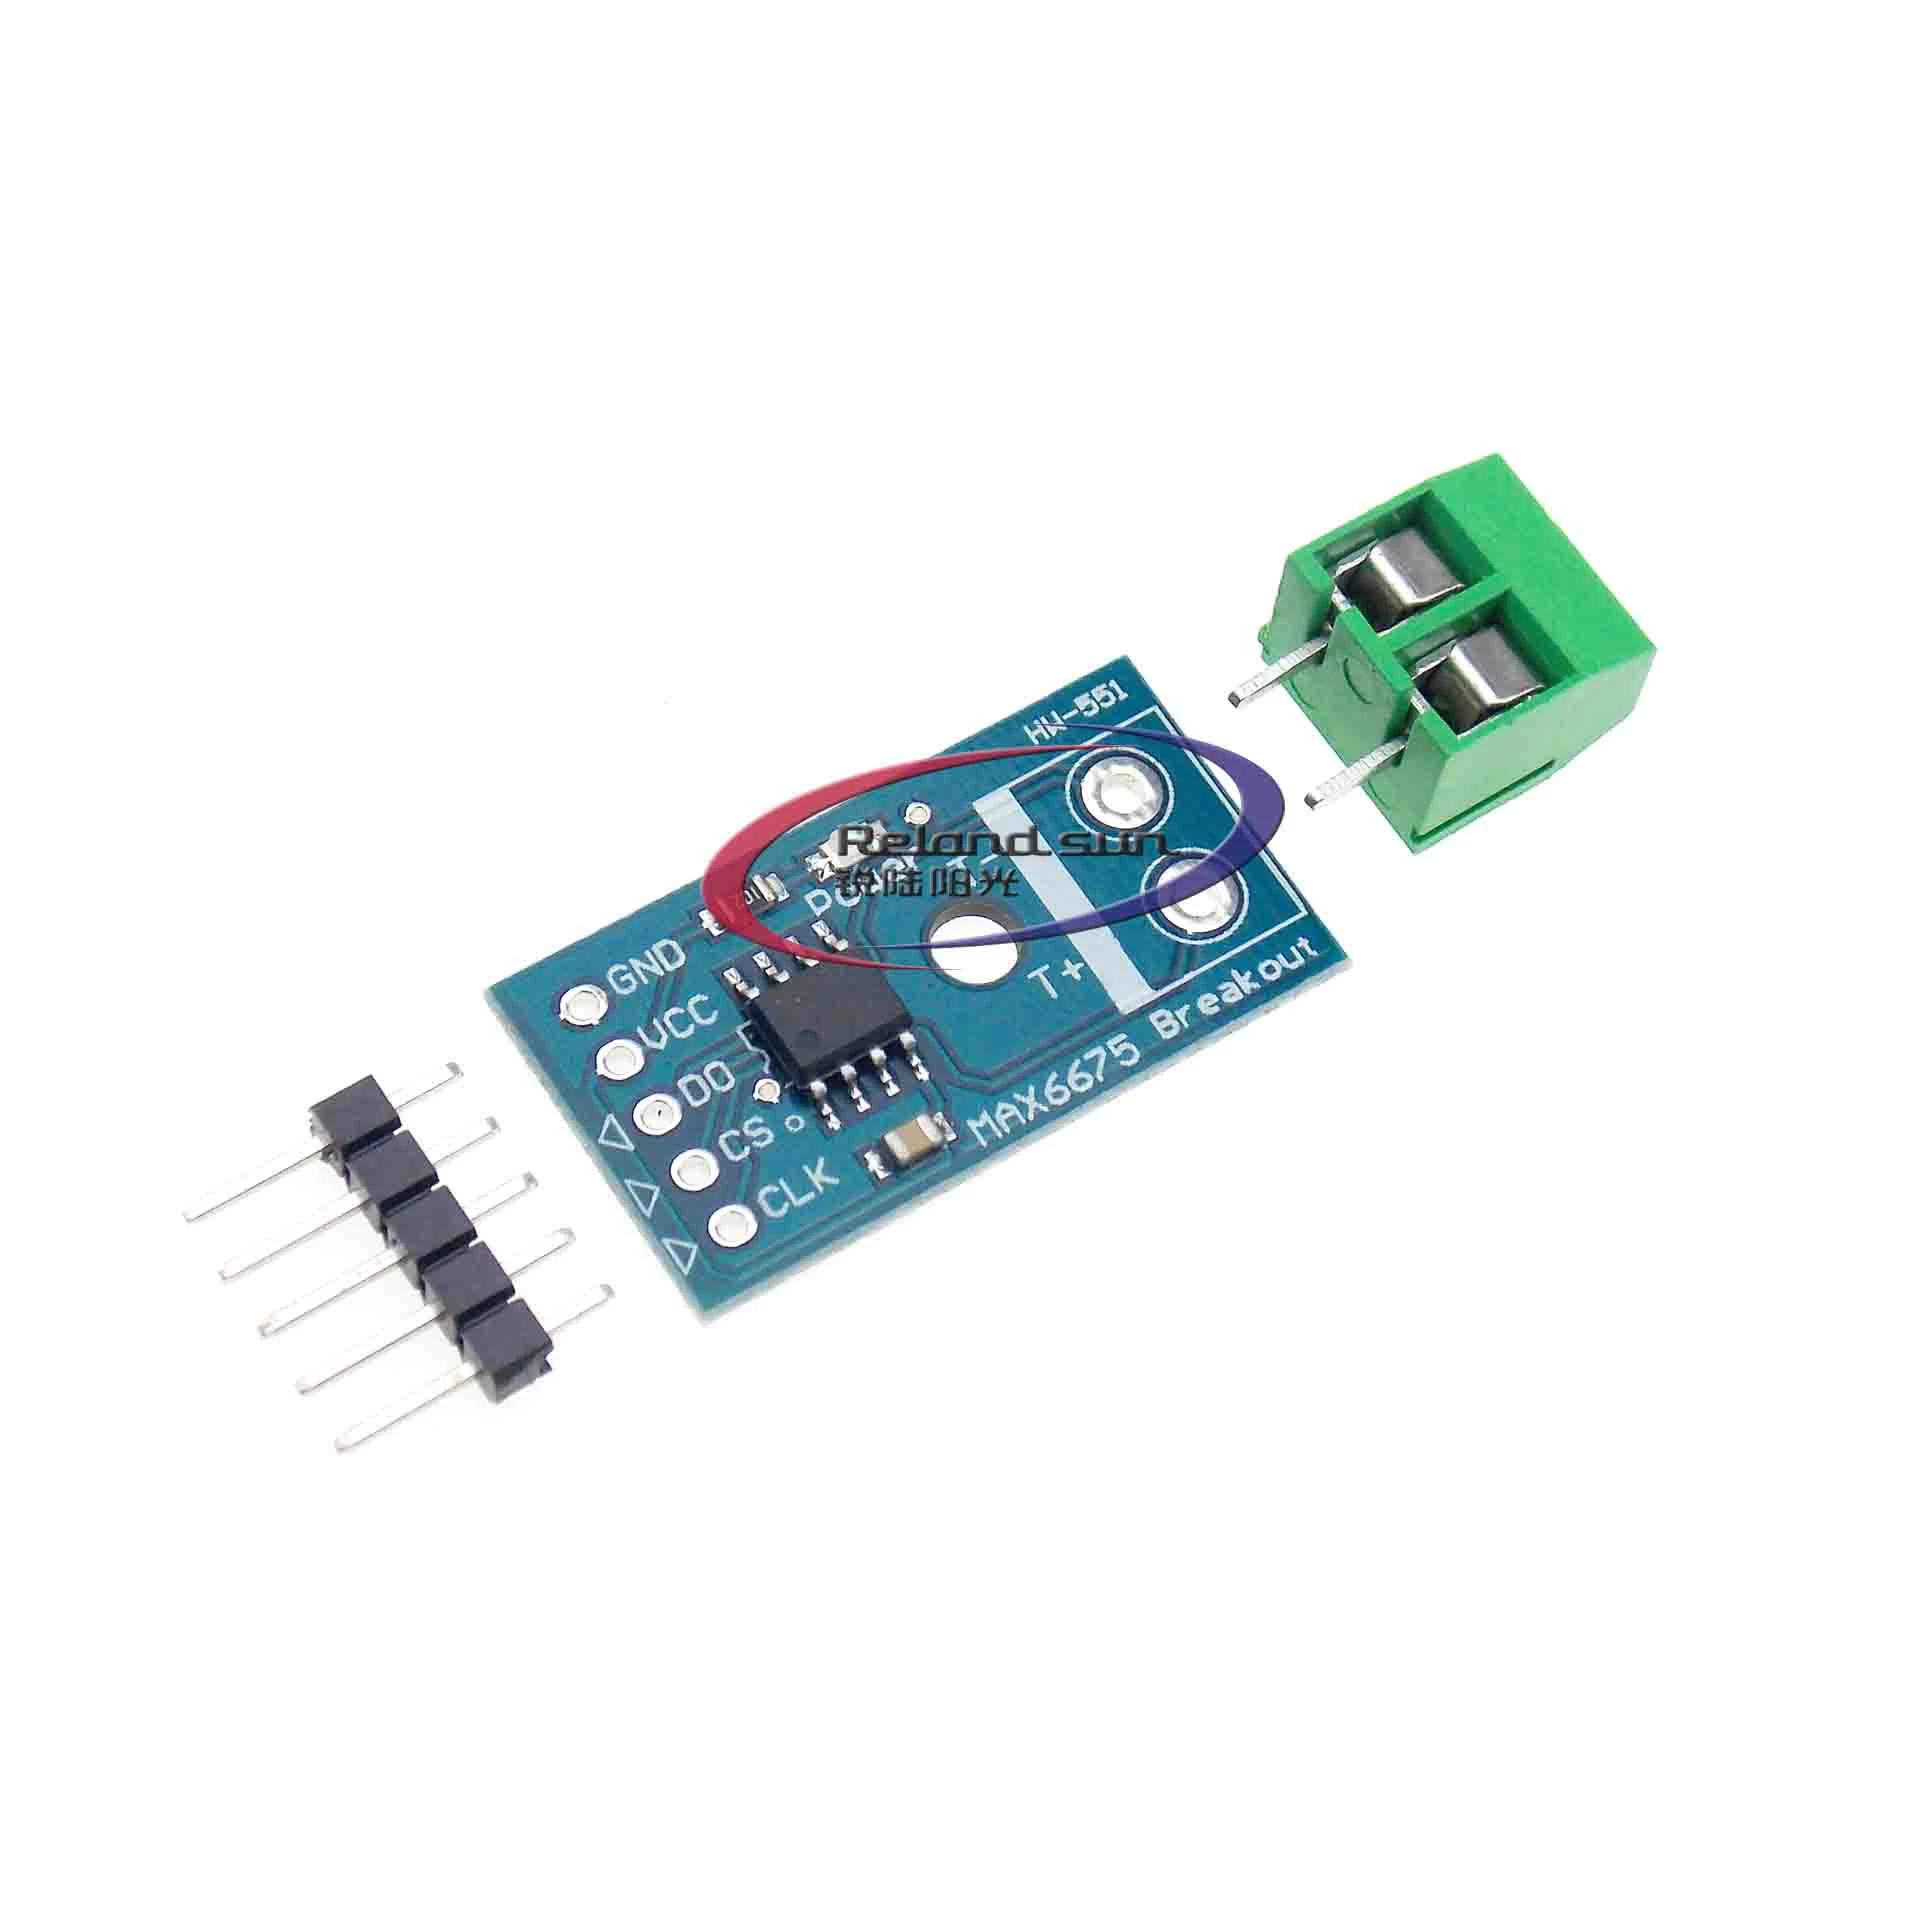 MAX6675 Thermocouple K Type temperature Sensor Module SPI interface for Arduino